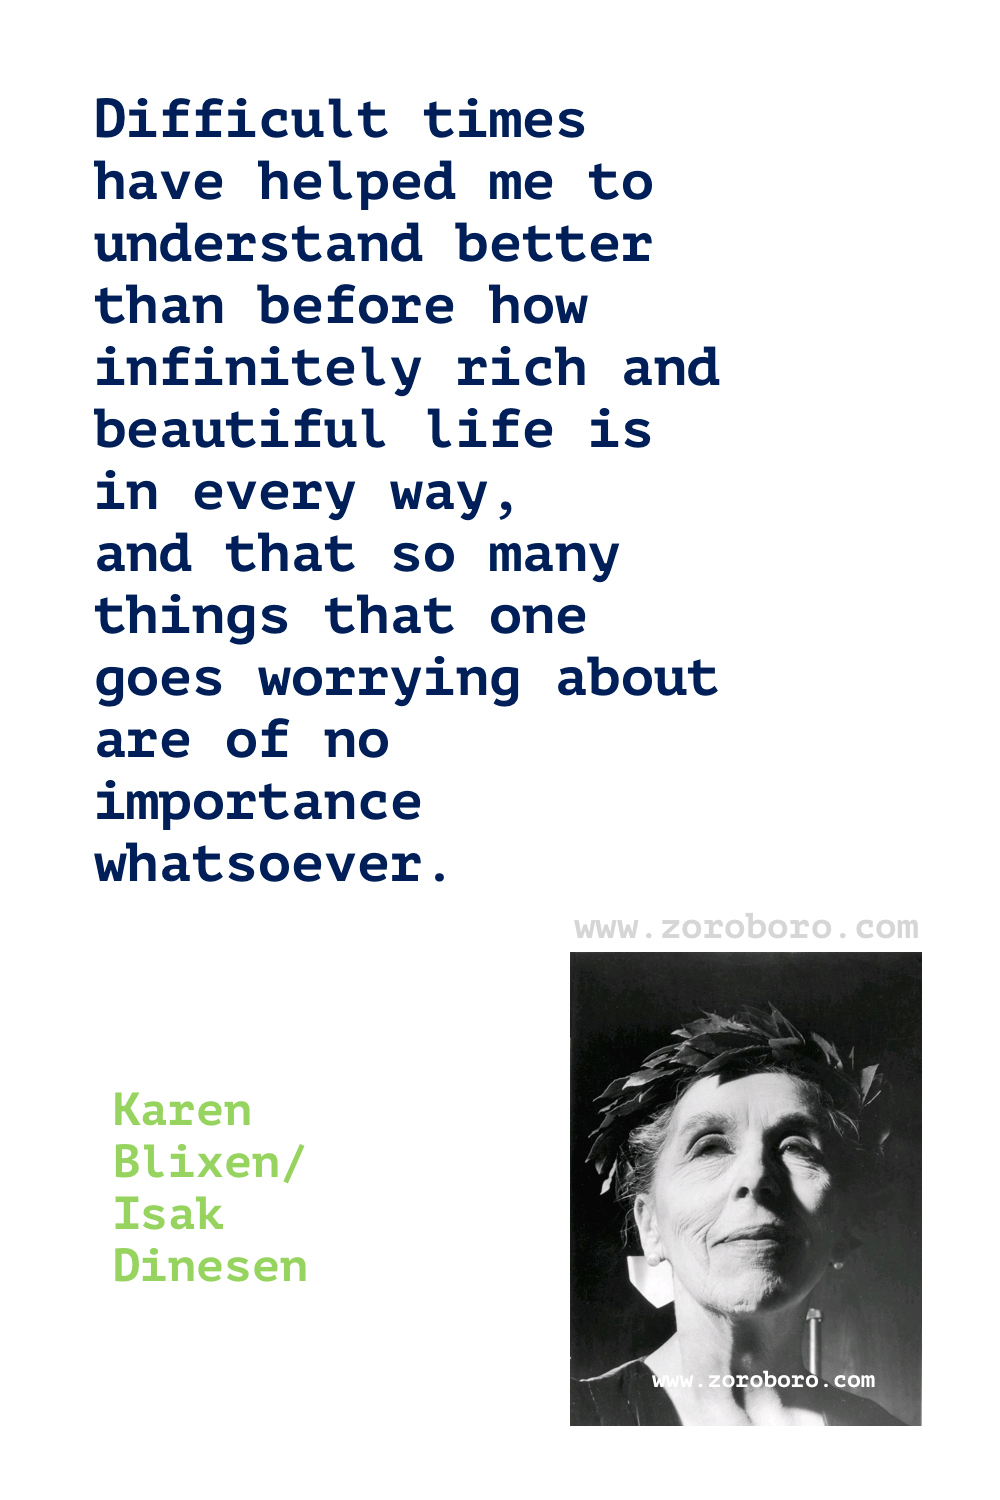 Karen Blixen Quotes. Isak Dinesen Quotes, Isak Dinesen Out of Africa Quotes. Karen Blixen Books Quotes.